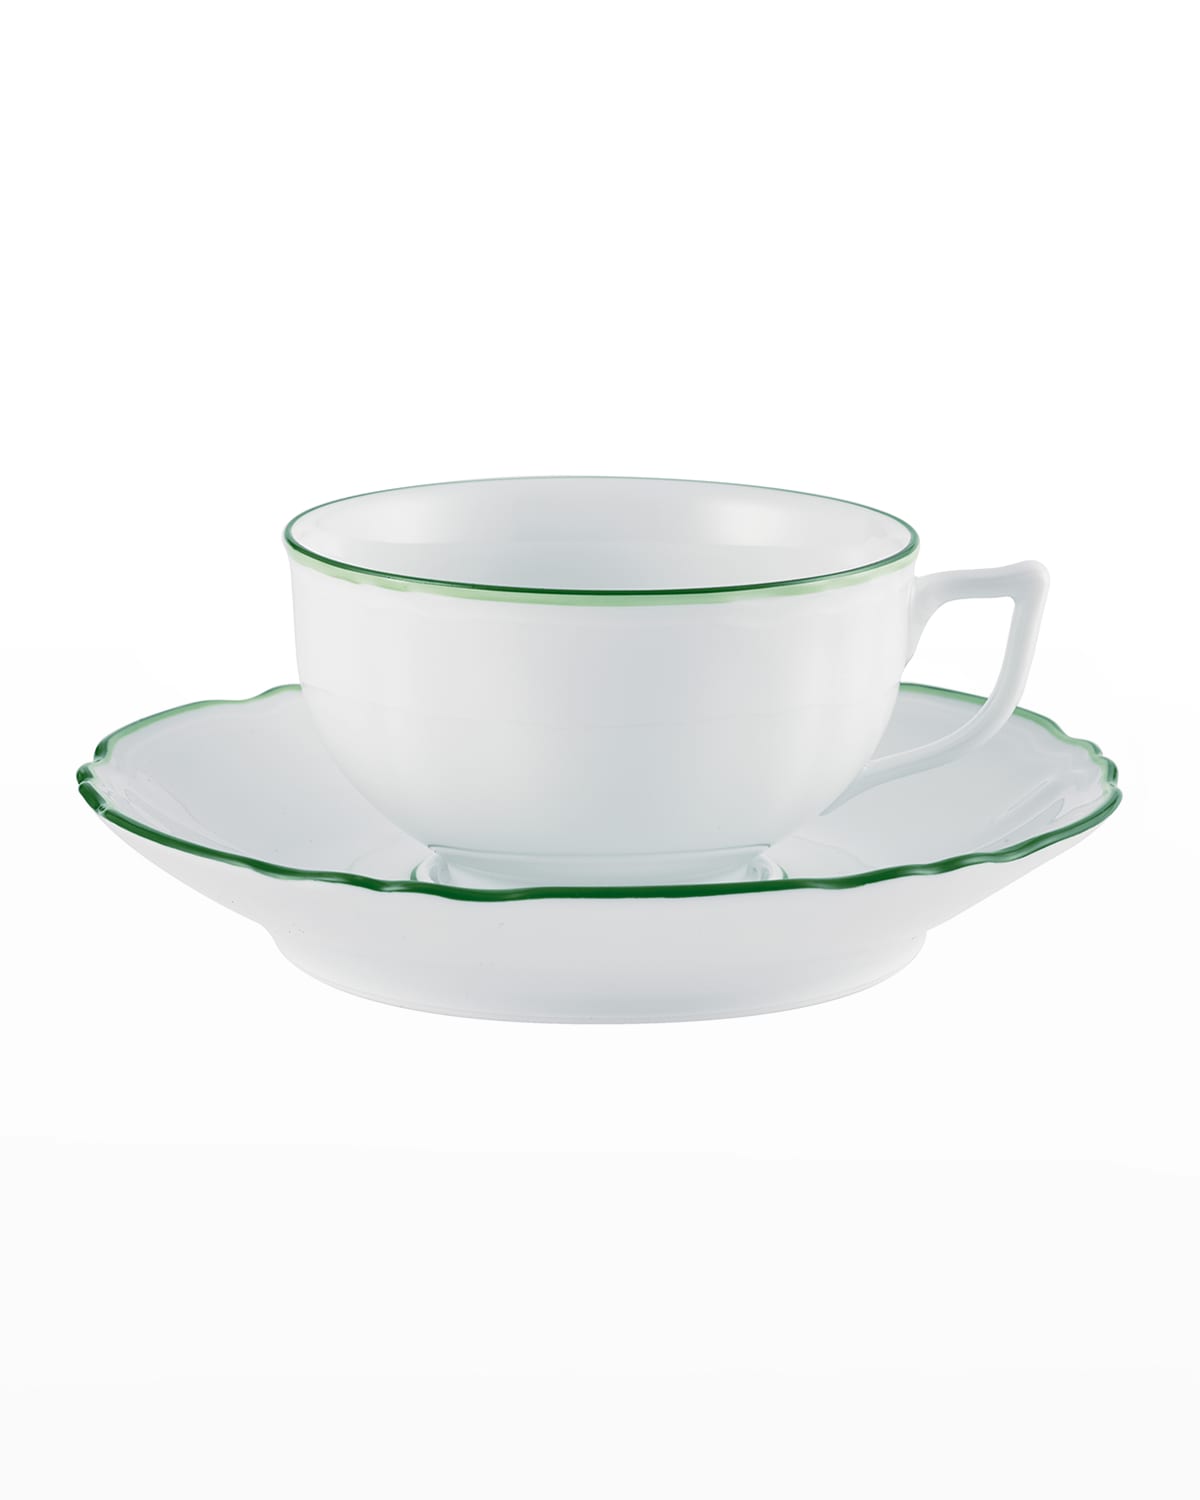 Raynaud Touraine Double Filet Green Teacup